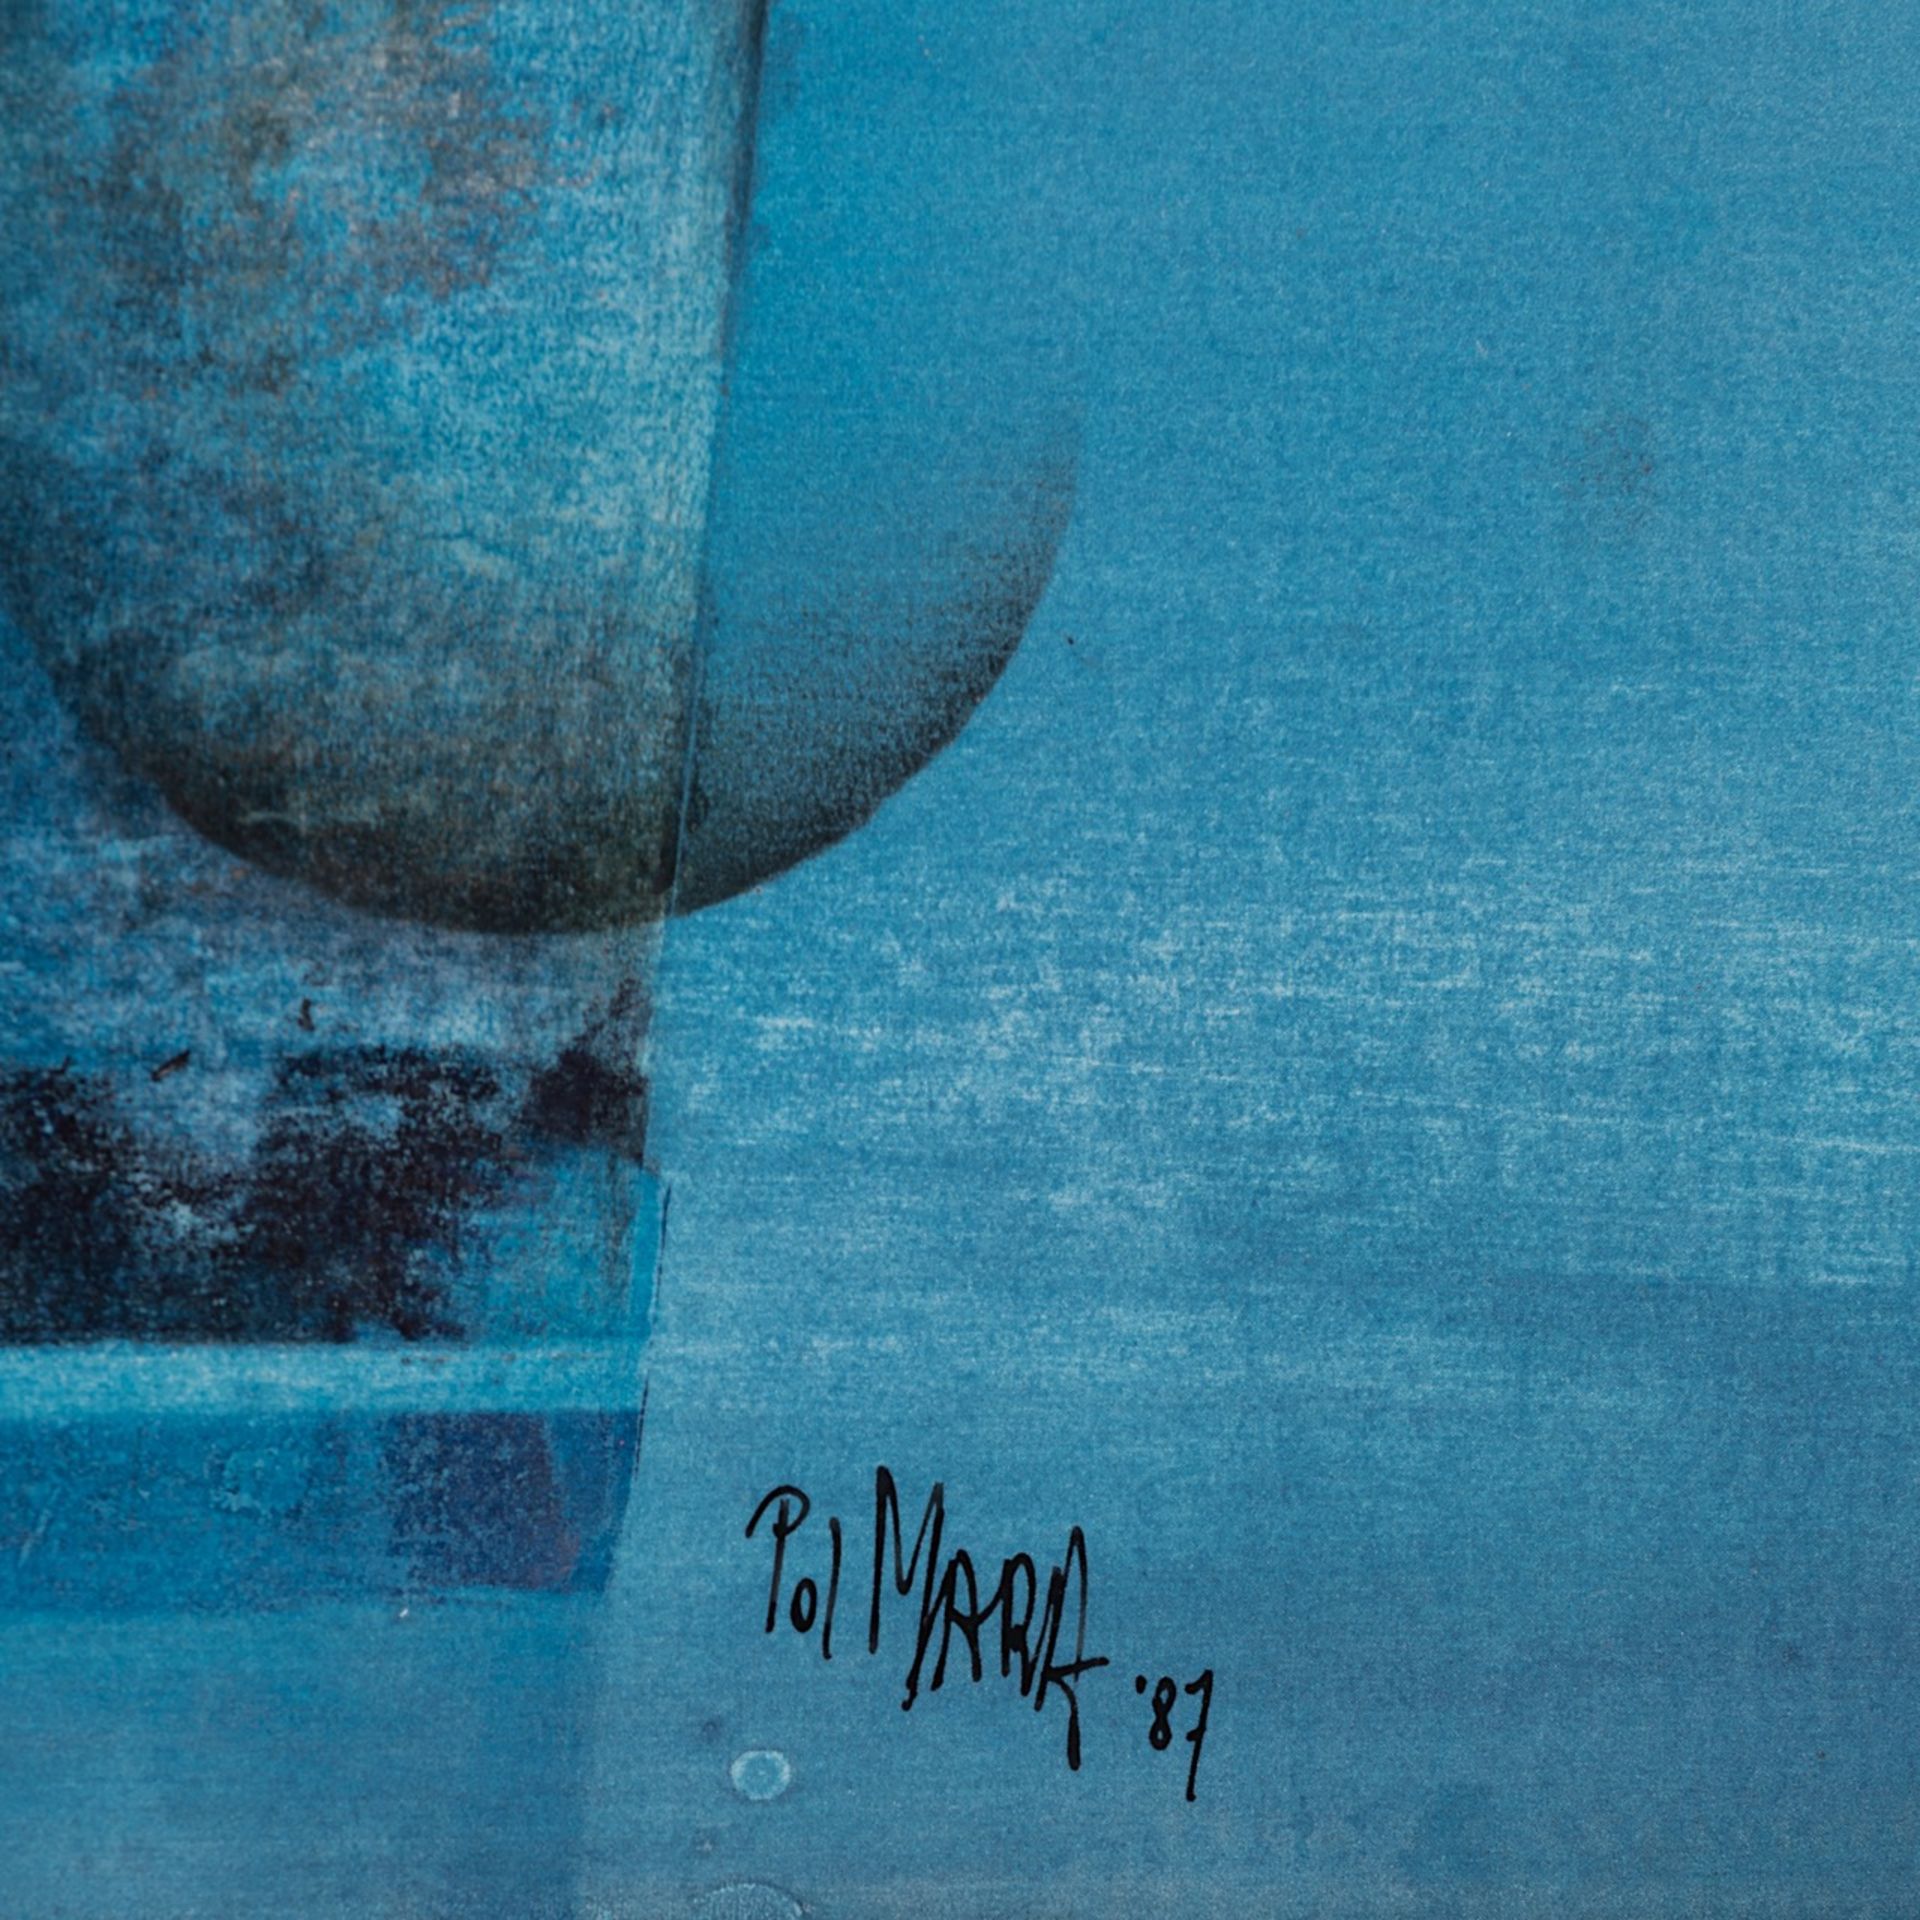 Pol Mara (1920-1998), 'Pour les contes de Tchekov', watercolour and mixed media on paper, 1987 118 x - Image 4 of 7